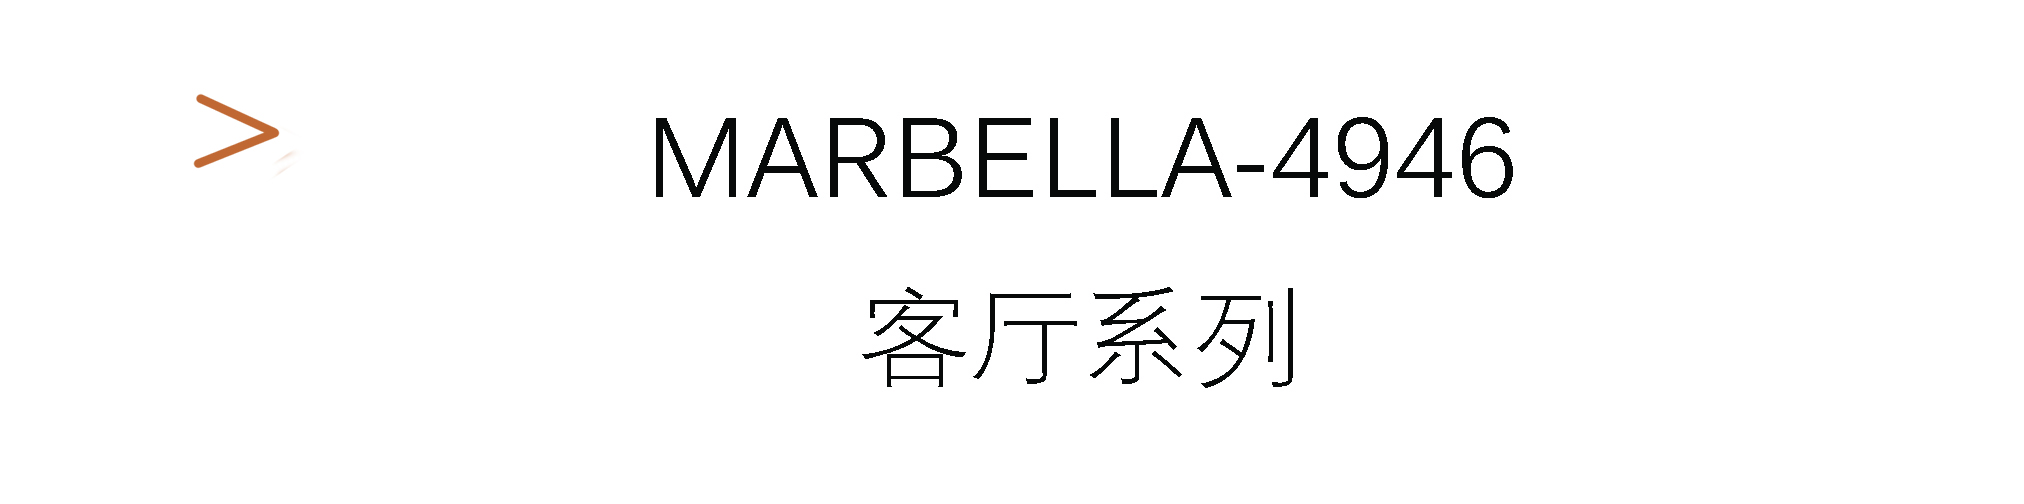 Marbella-4946